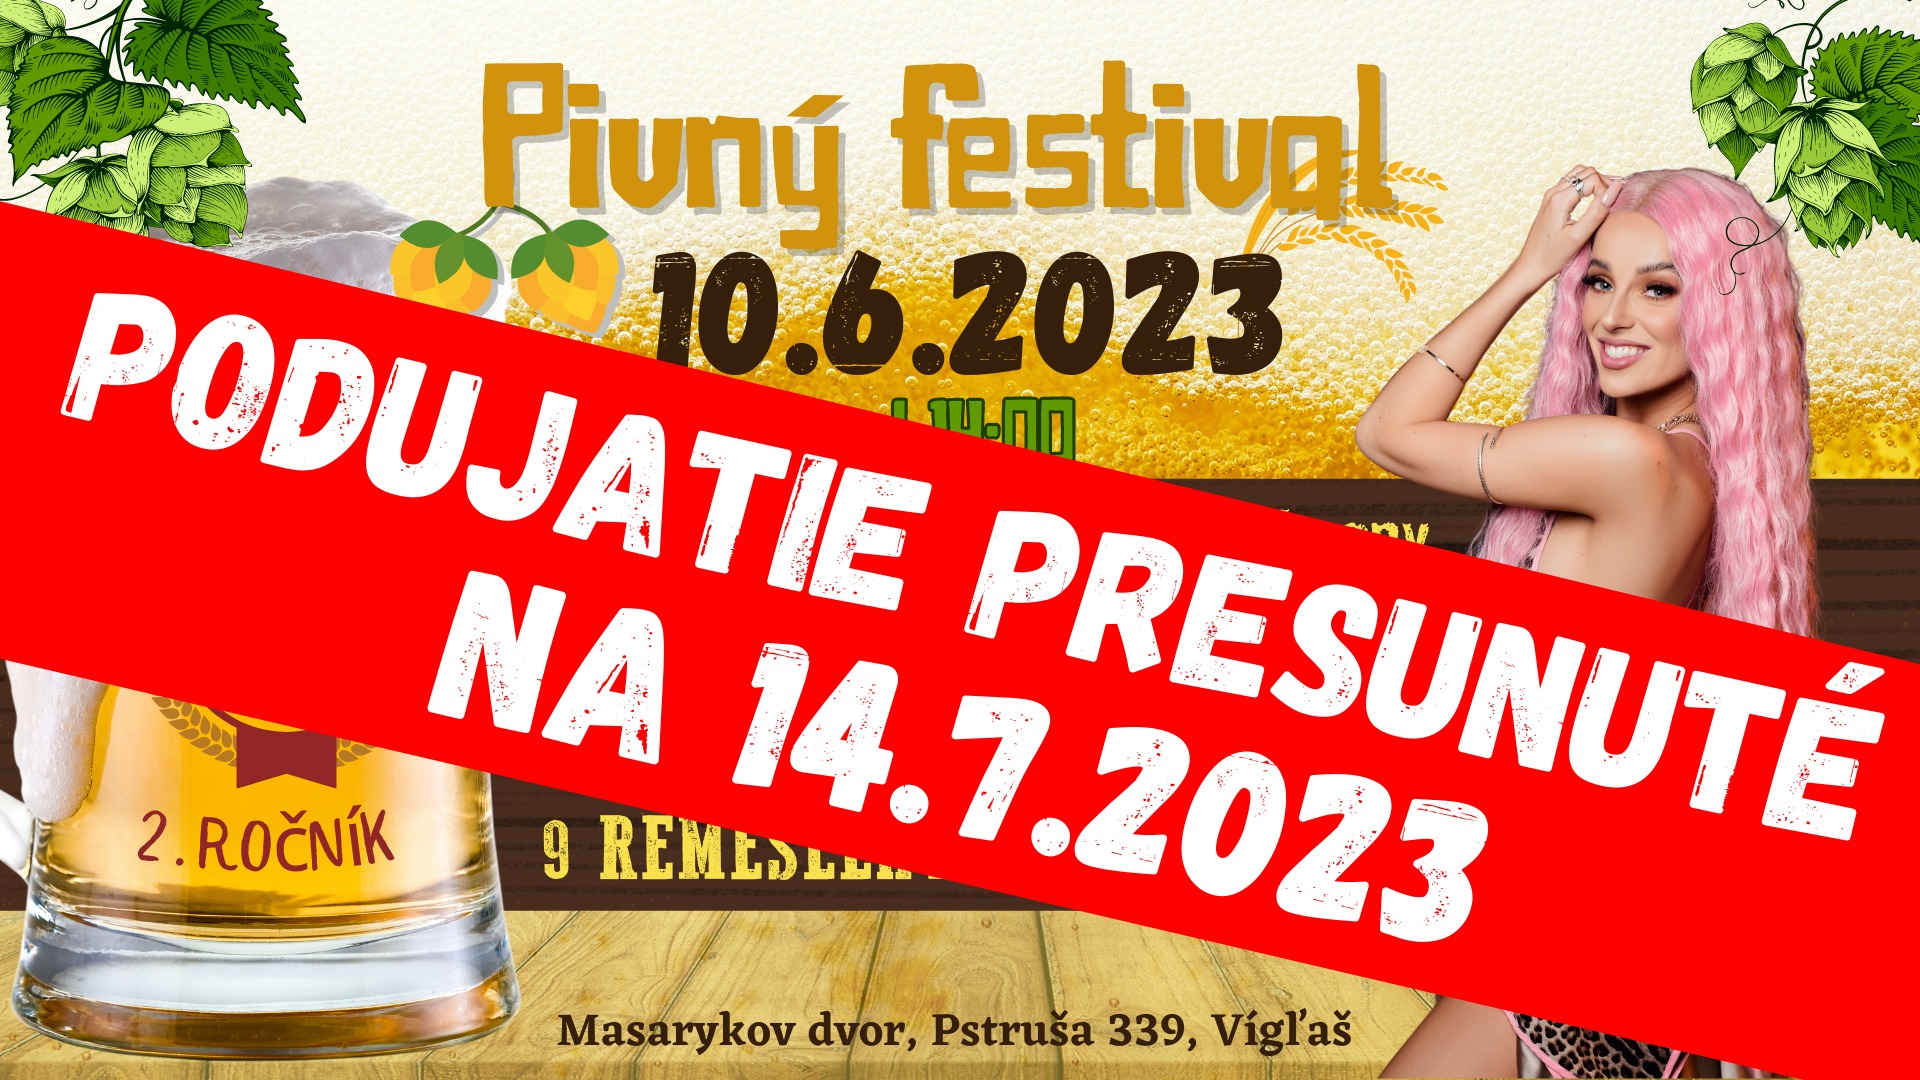 Pivn festival na Masarykovom dvore 2023 Vga -2. ronk